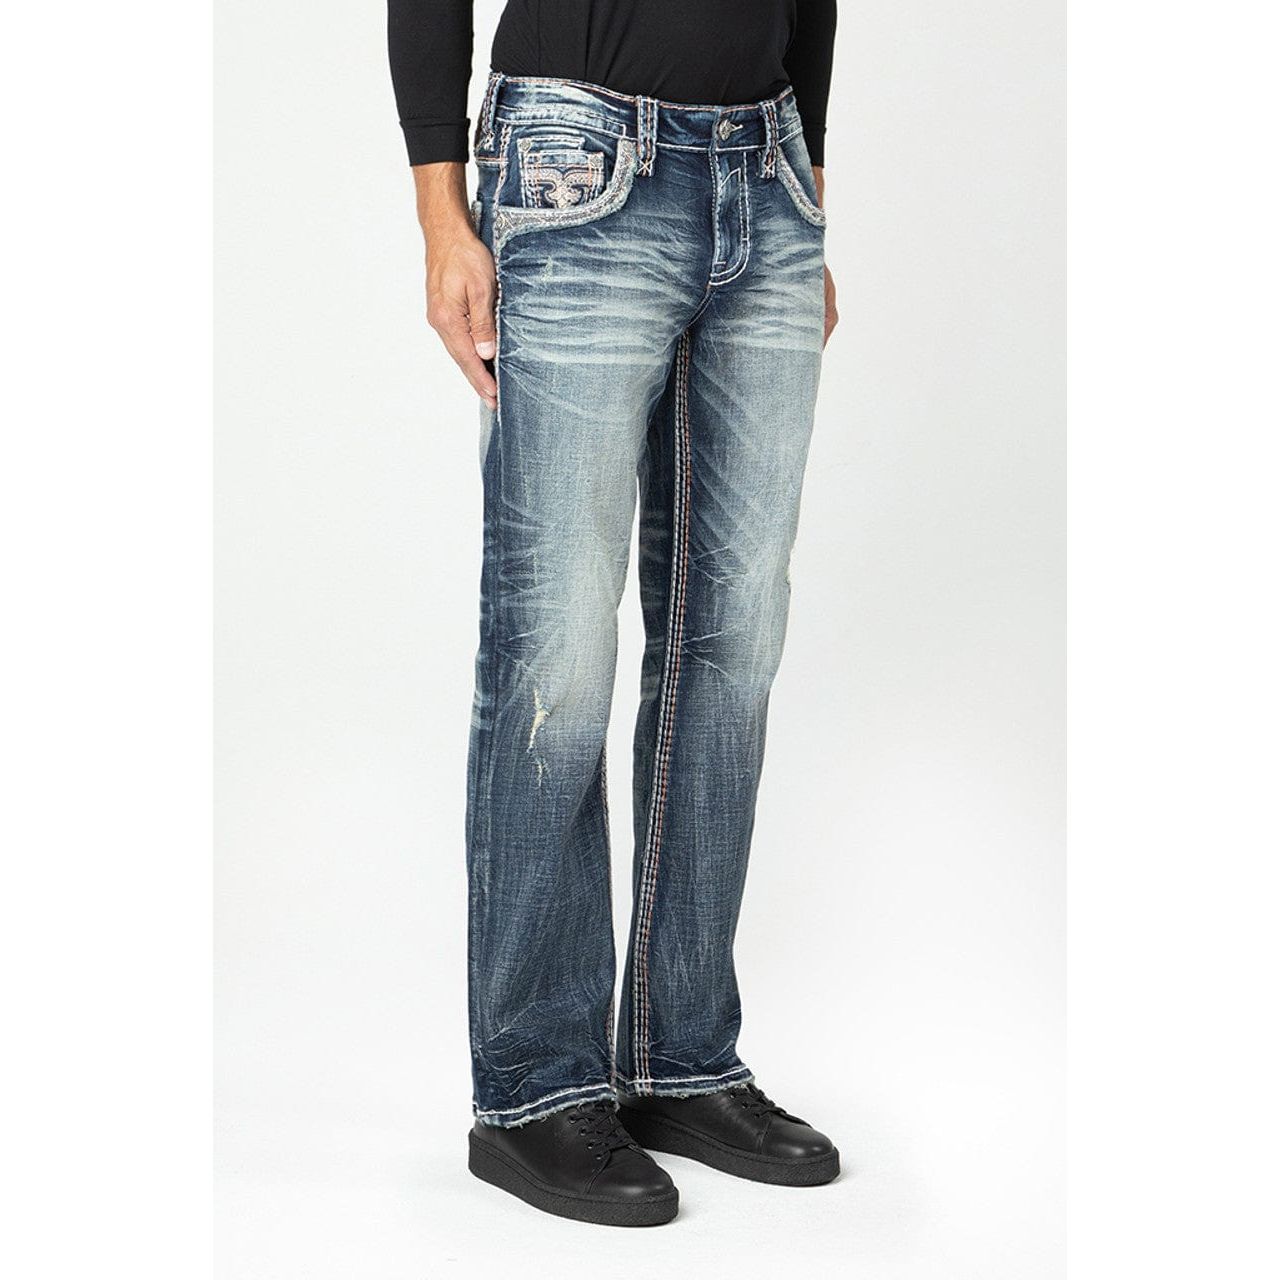 Rock Revival Men's Rey J203r Straight Jeans - Stylish Western